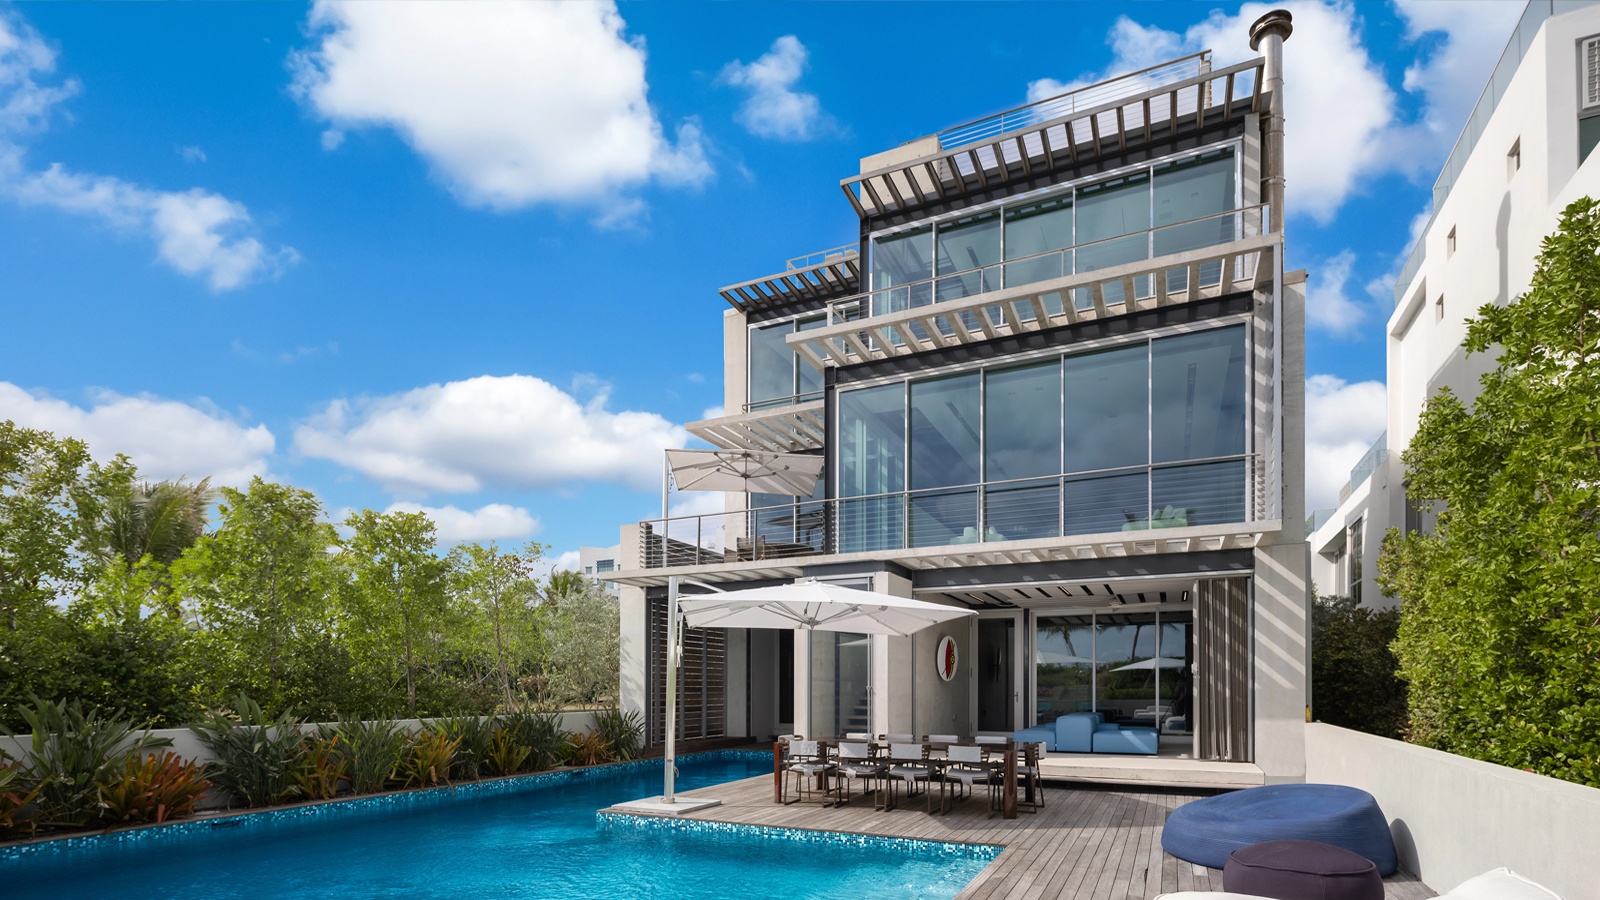 Morgan Blittner, Miami Luxury Real Estate